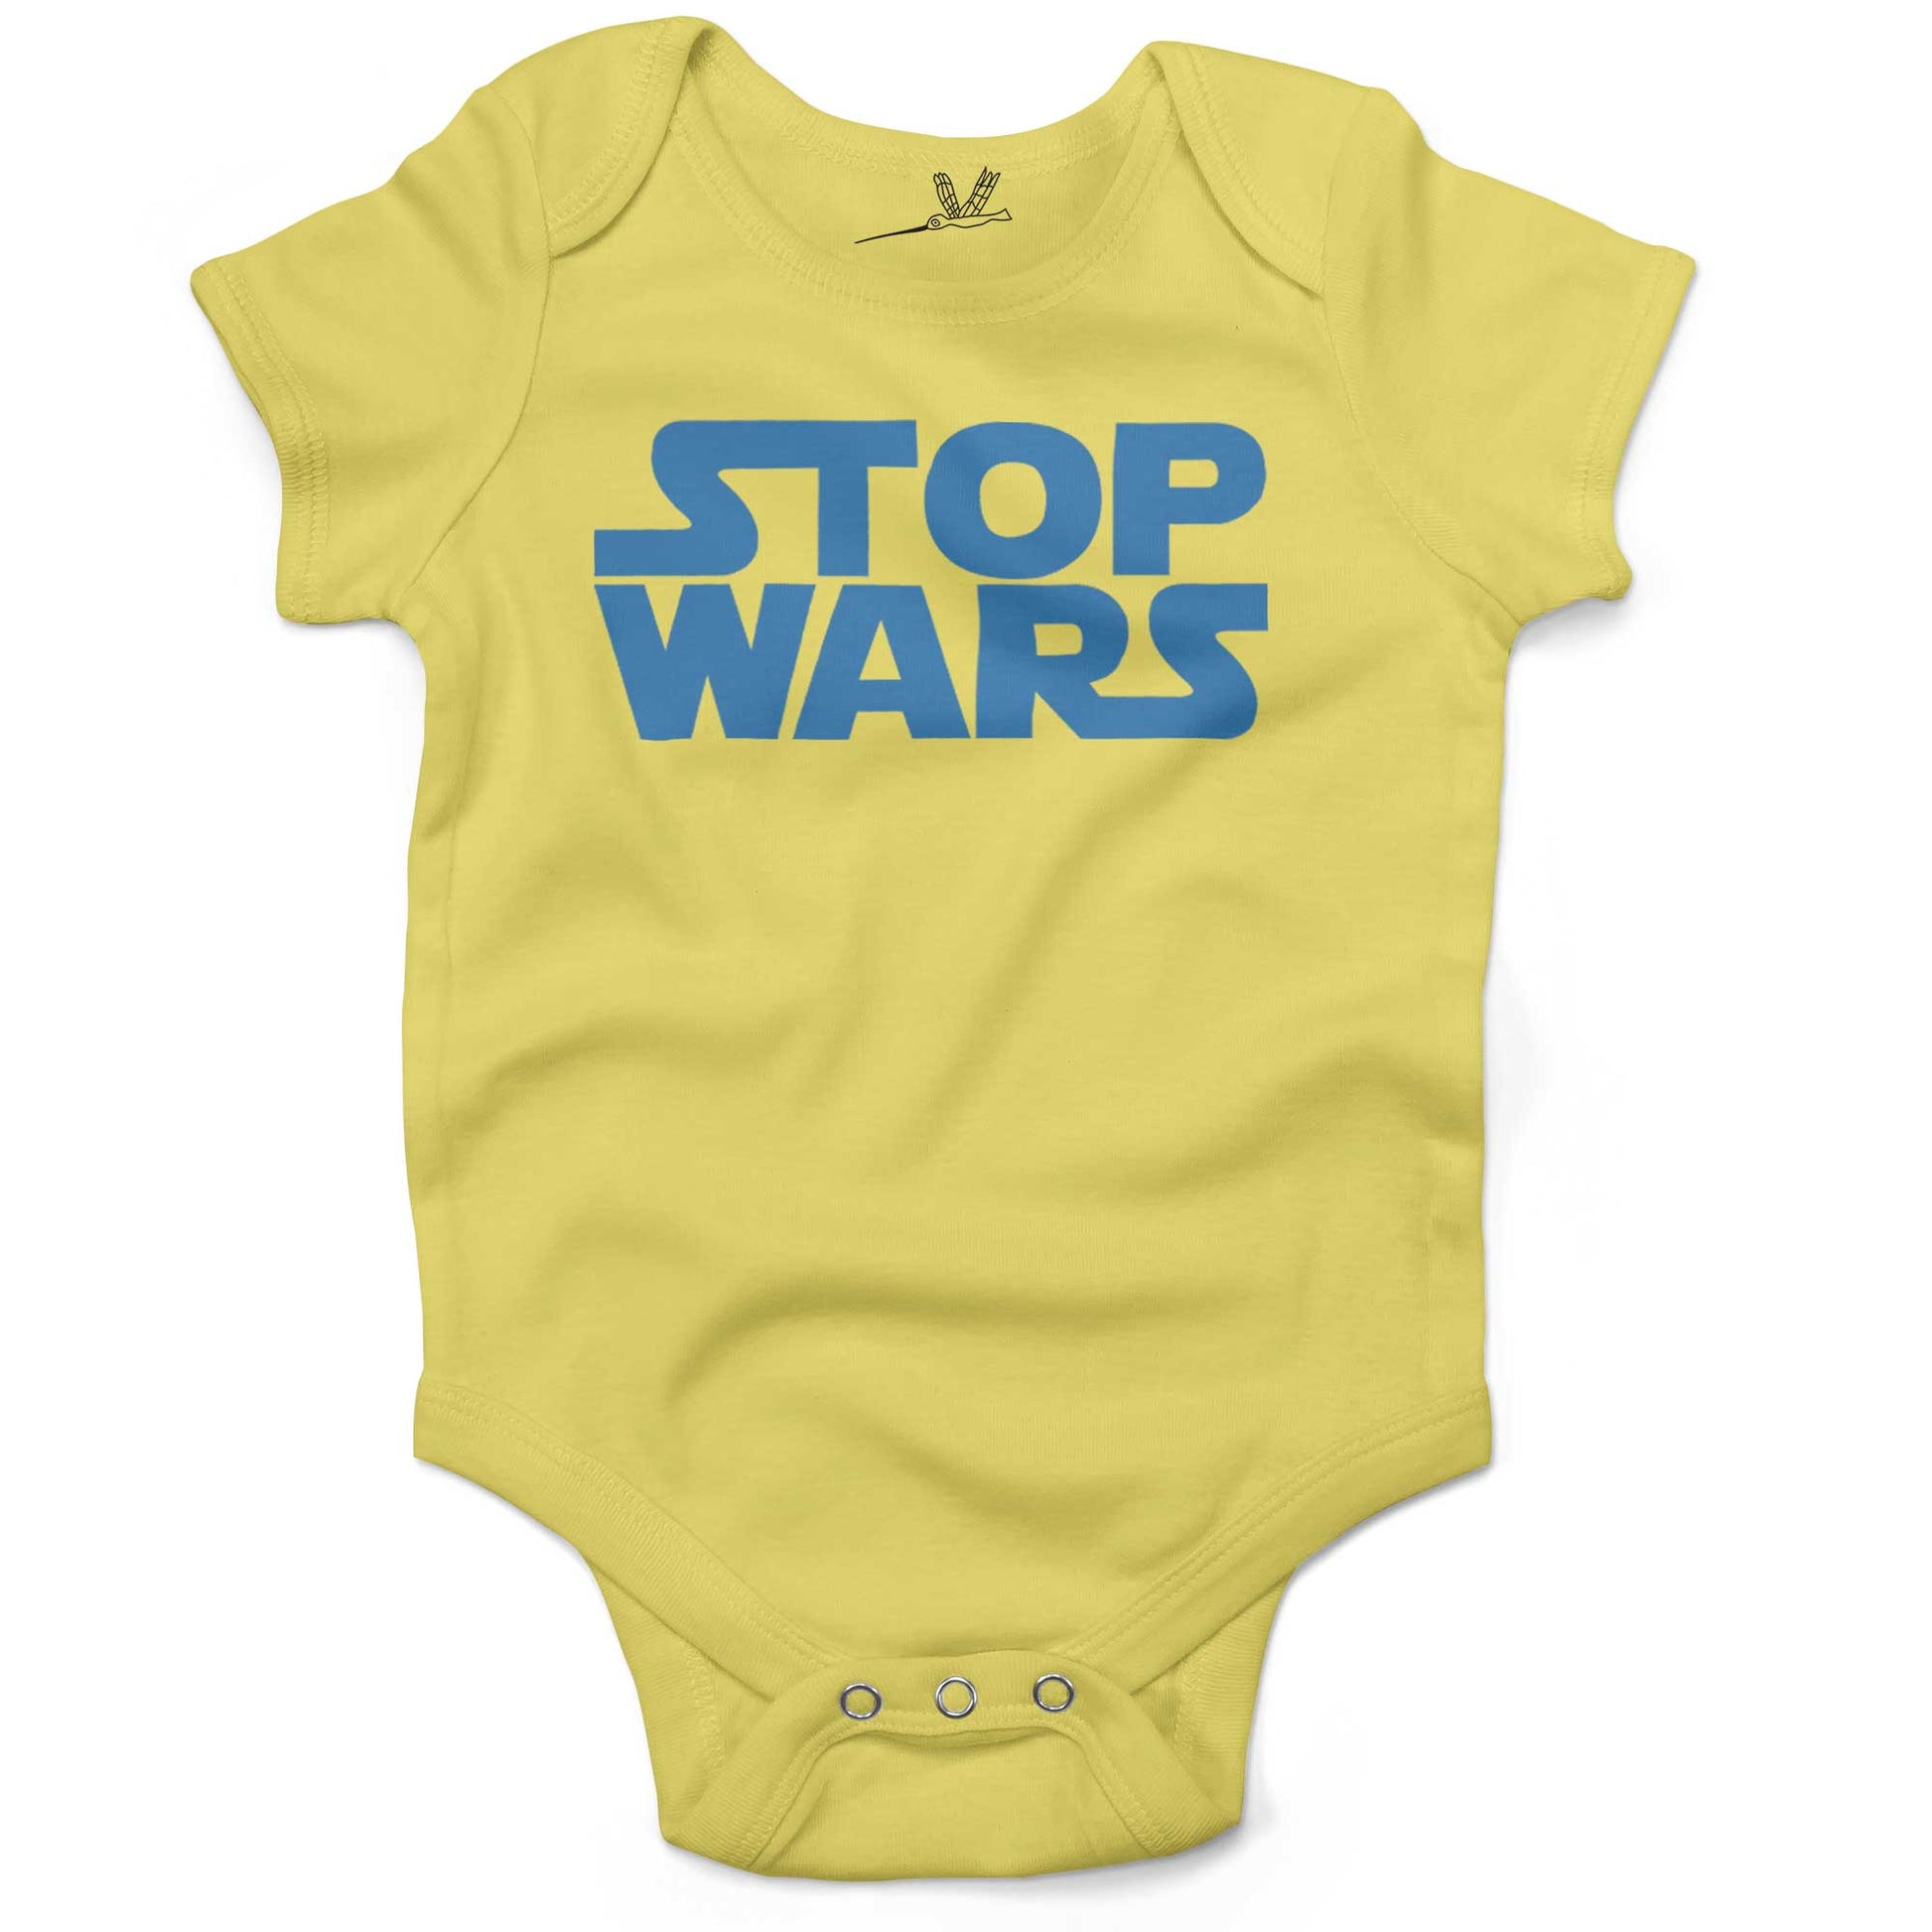 STOP WARS Infant Bodysuit or Raglan Baby Tee-Yellow-3-6 months